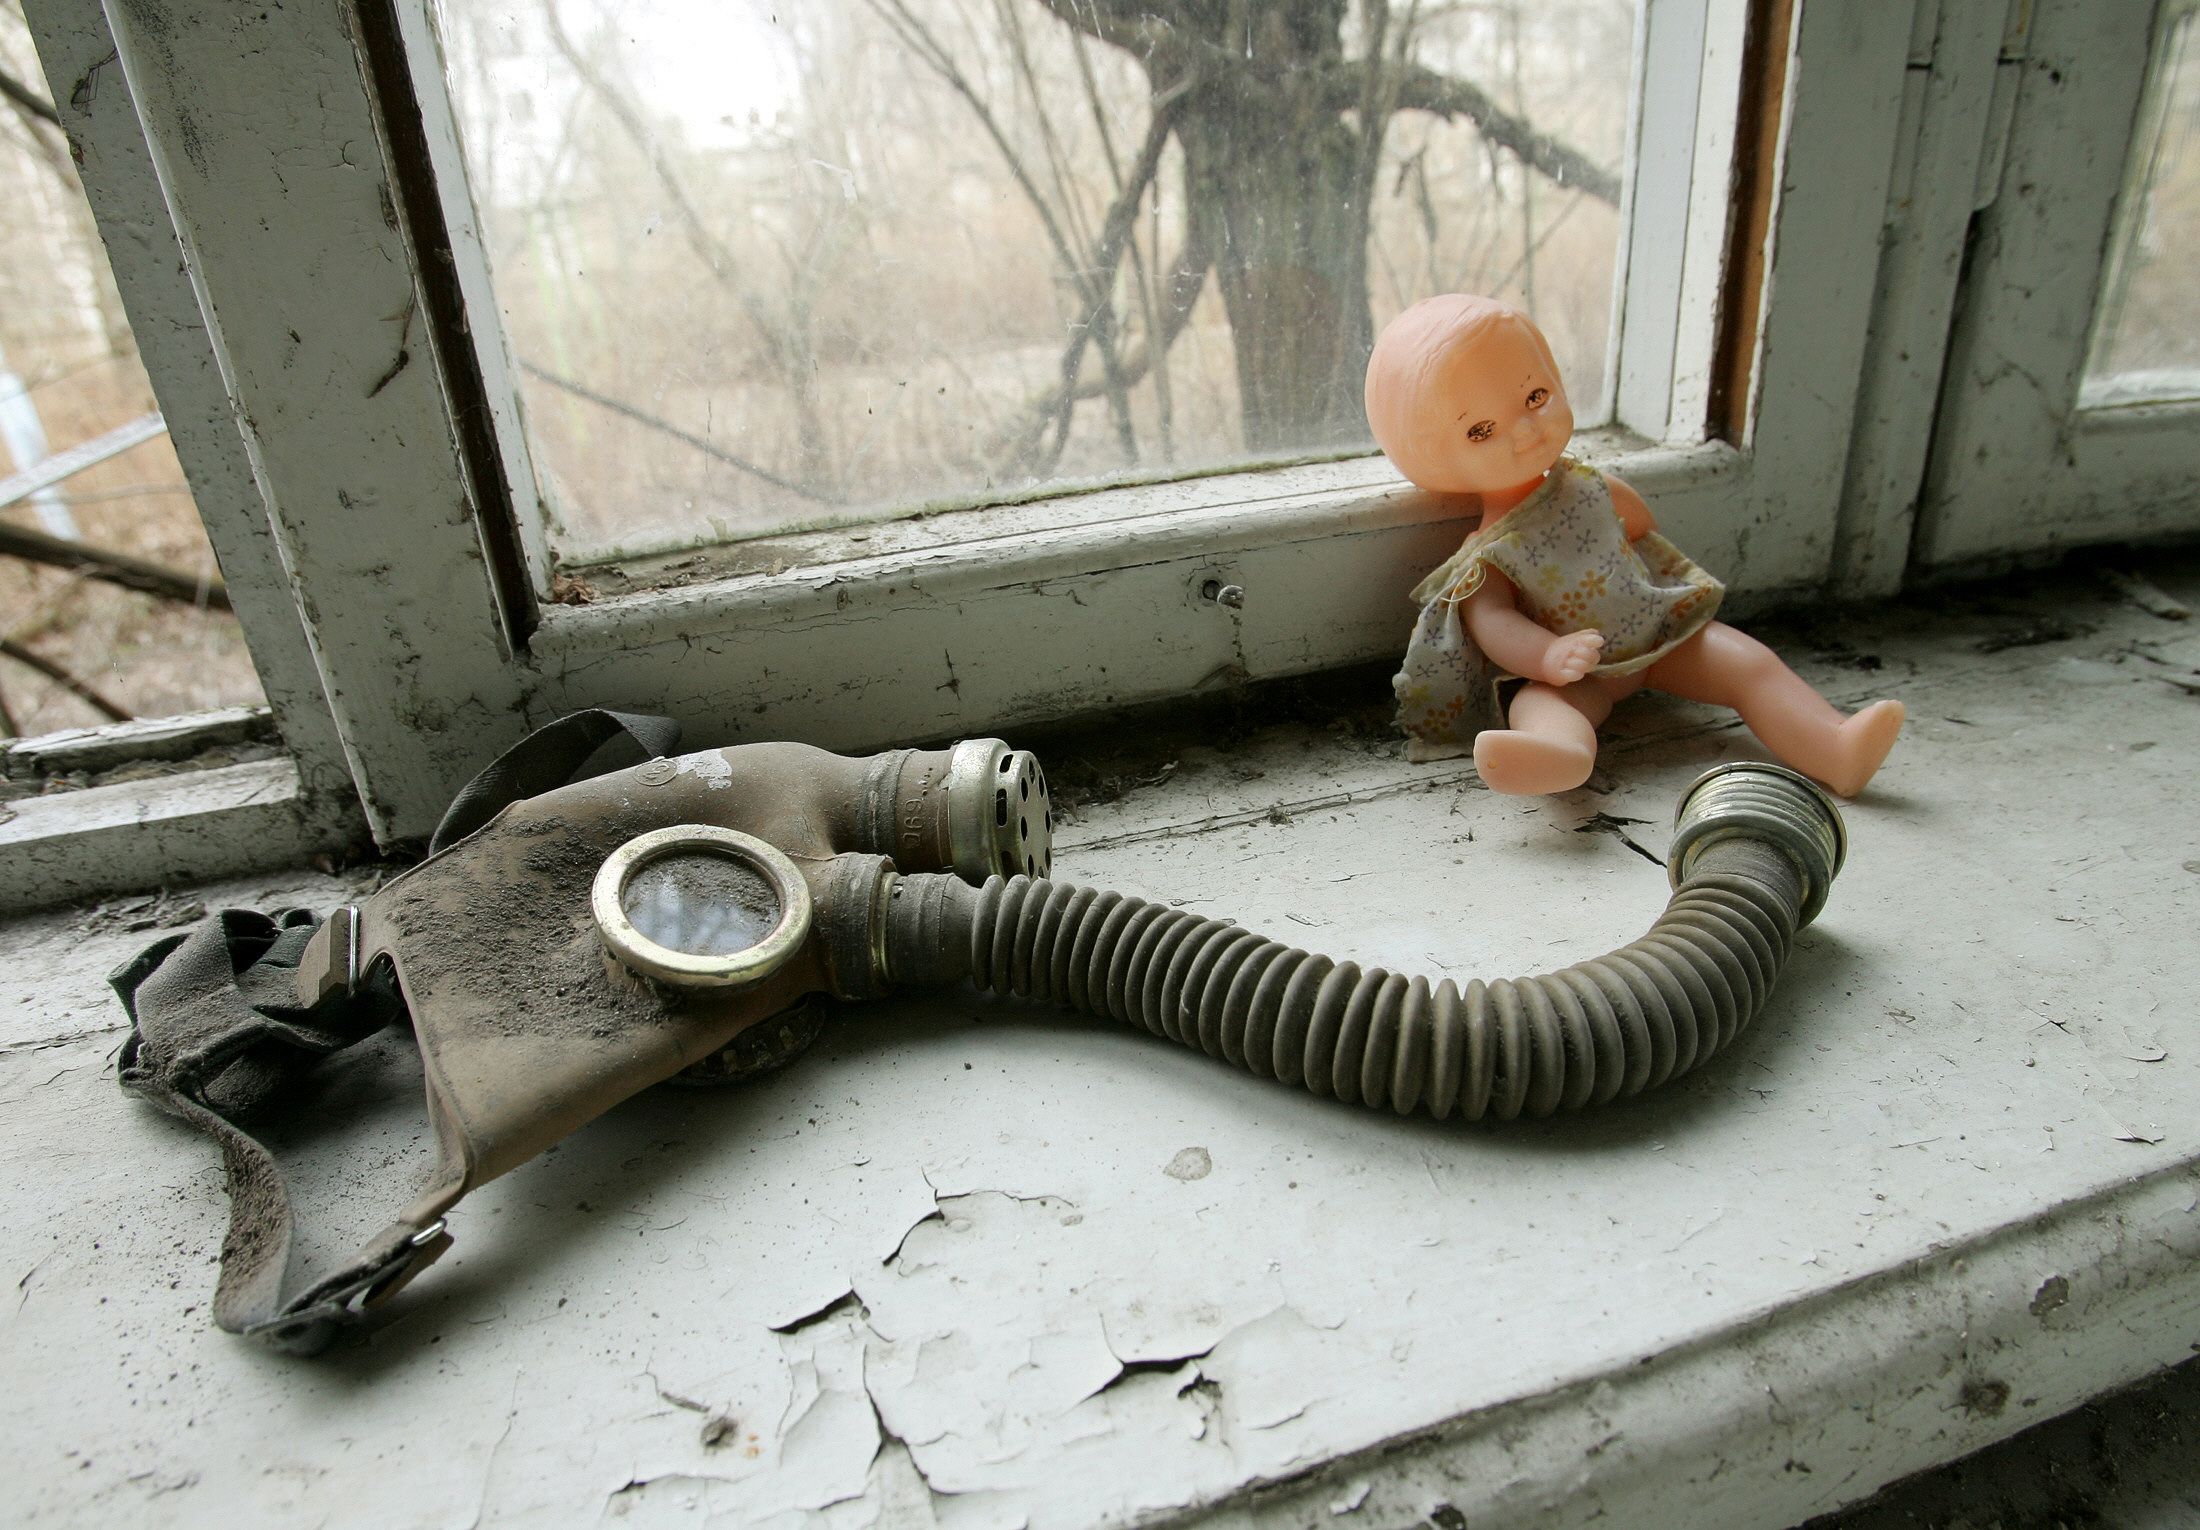 chernobyl disaster victims